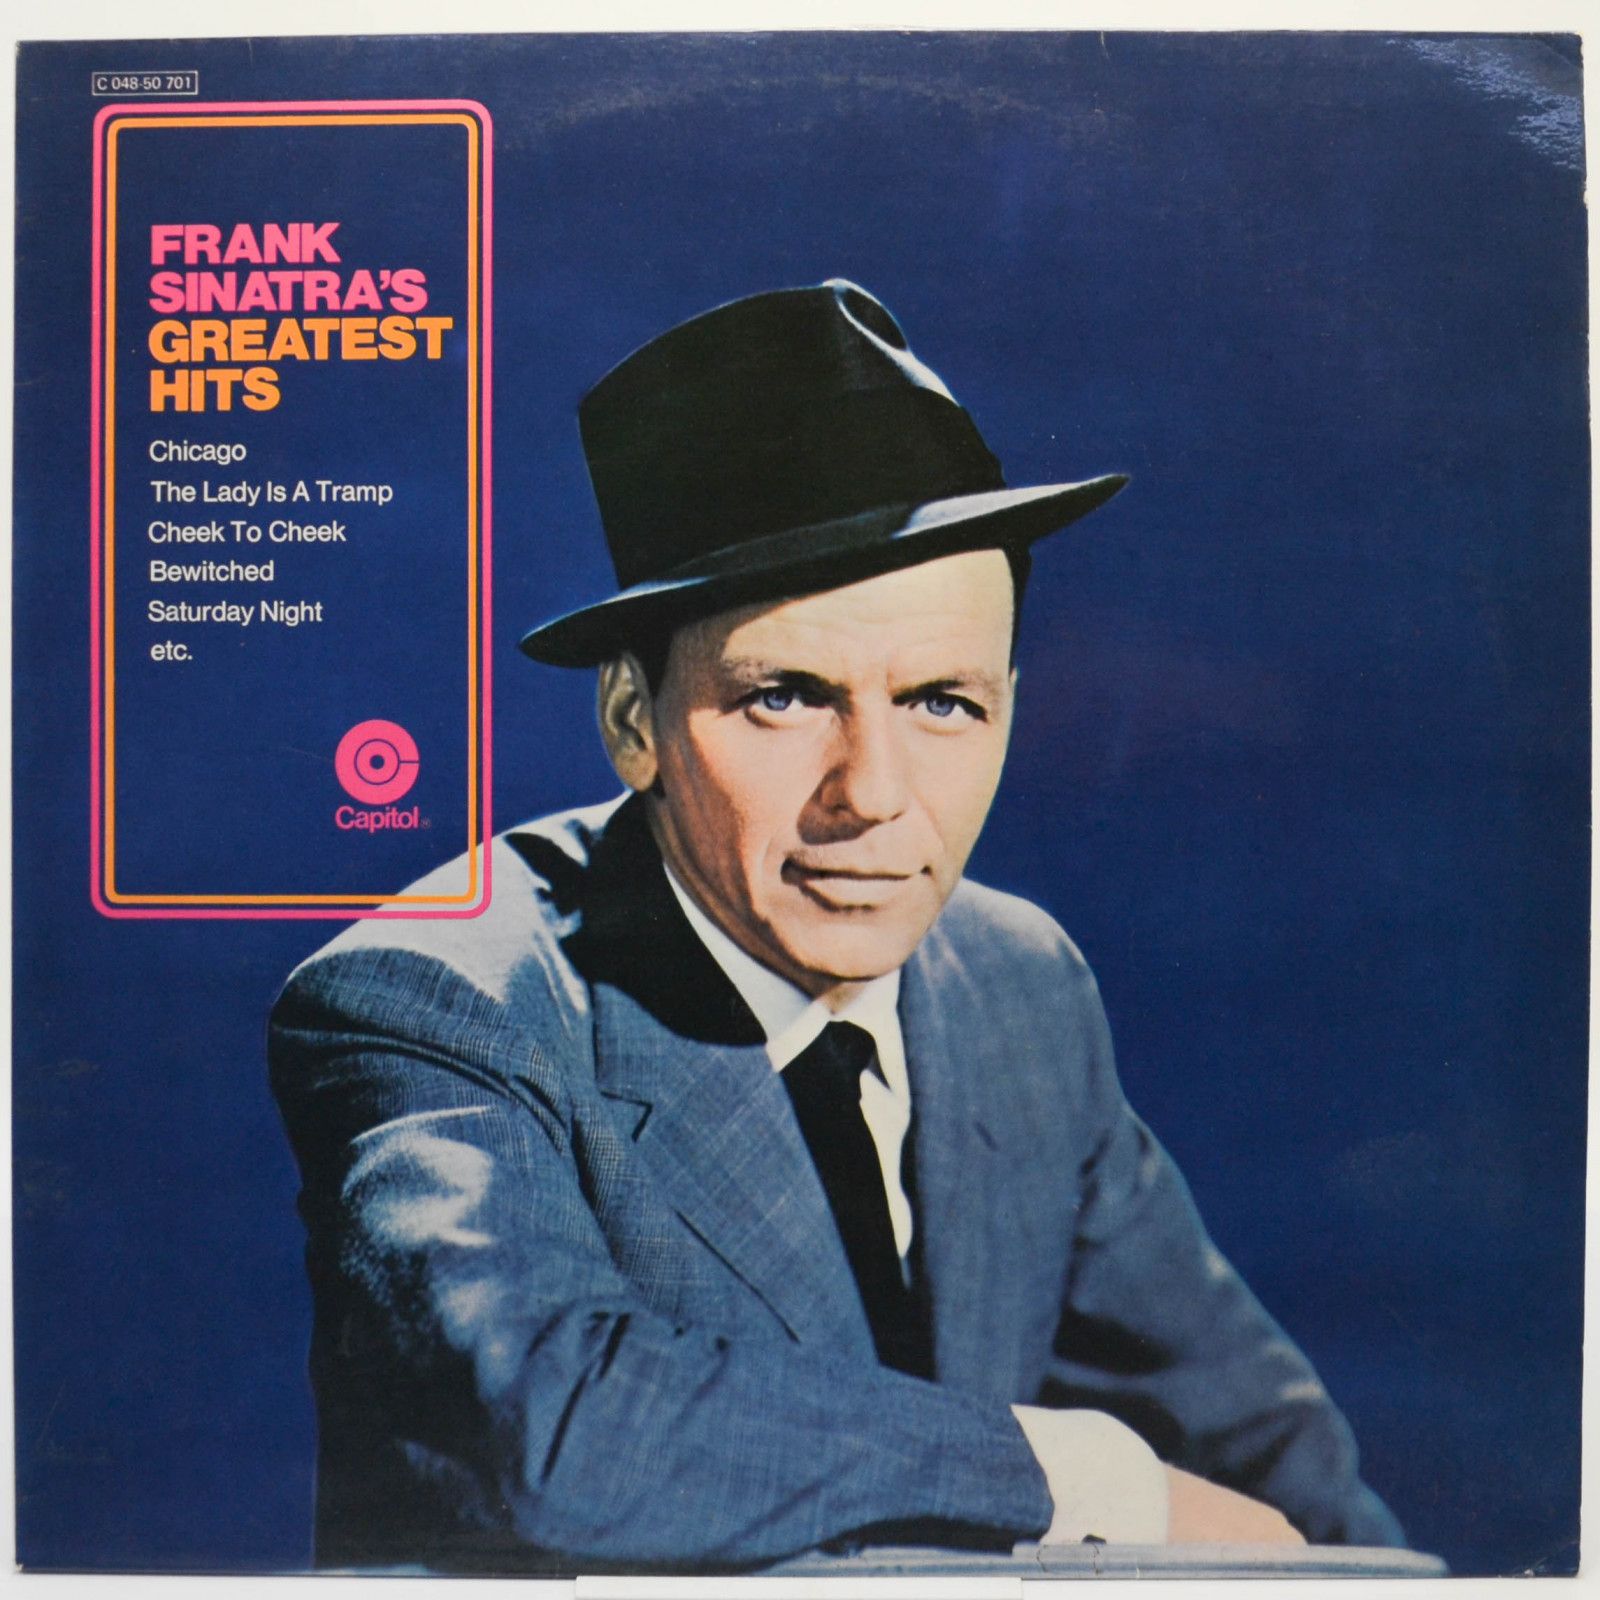 Фрэнк синатра хиты. Sinatra Greatest Hits винил. Frank Sinatra Greatest Hits пластинка. Frank Sinatra the Lady is a Tramp. Frank Sinatra обложка.